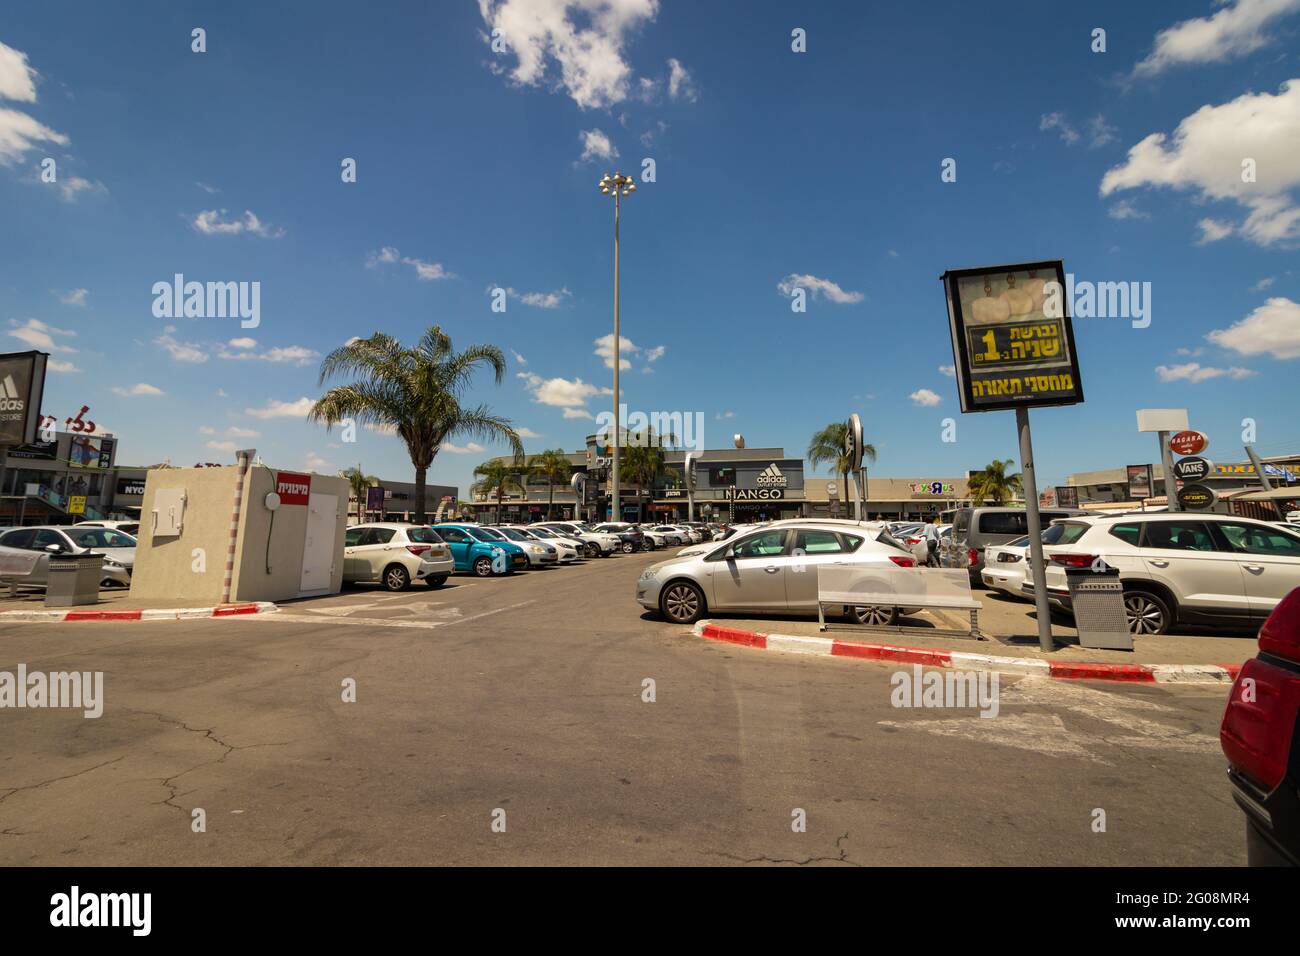 23-05-2021. kiryat-ekron - israel. The parking lot of the Ofer Mall at Bilu Junction, Stock Photo